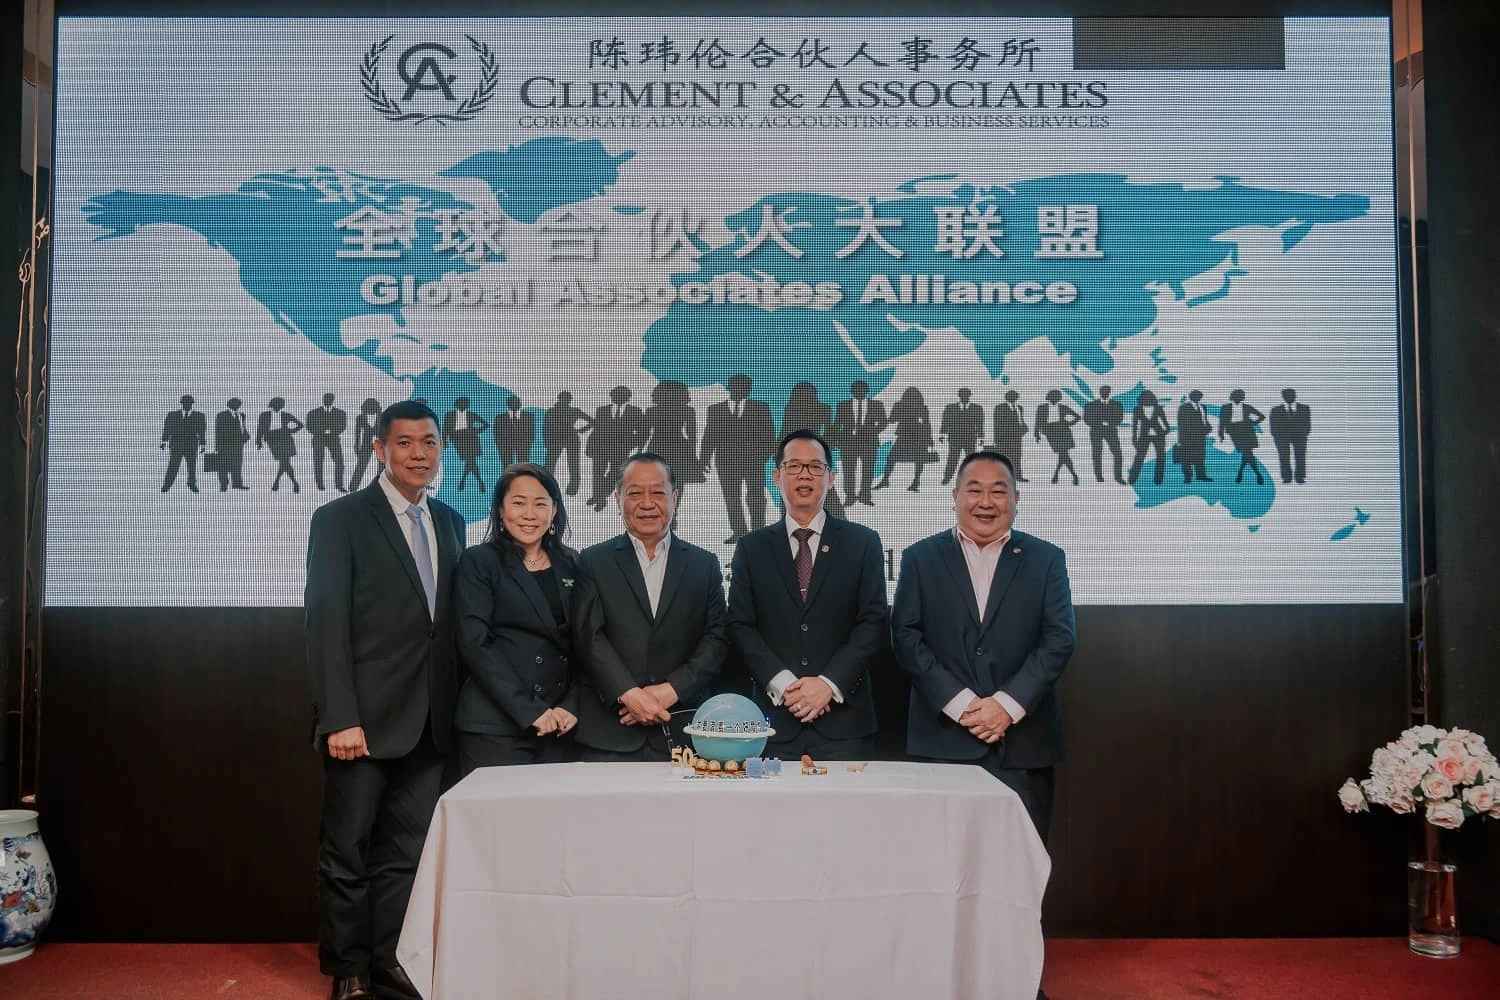 C&A Global Associates Union Launching Ceremony